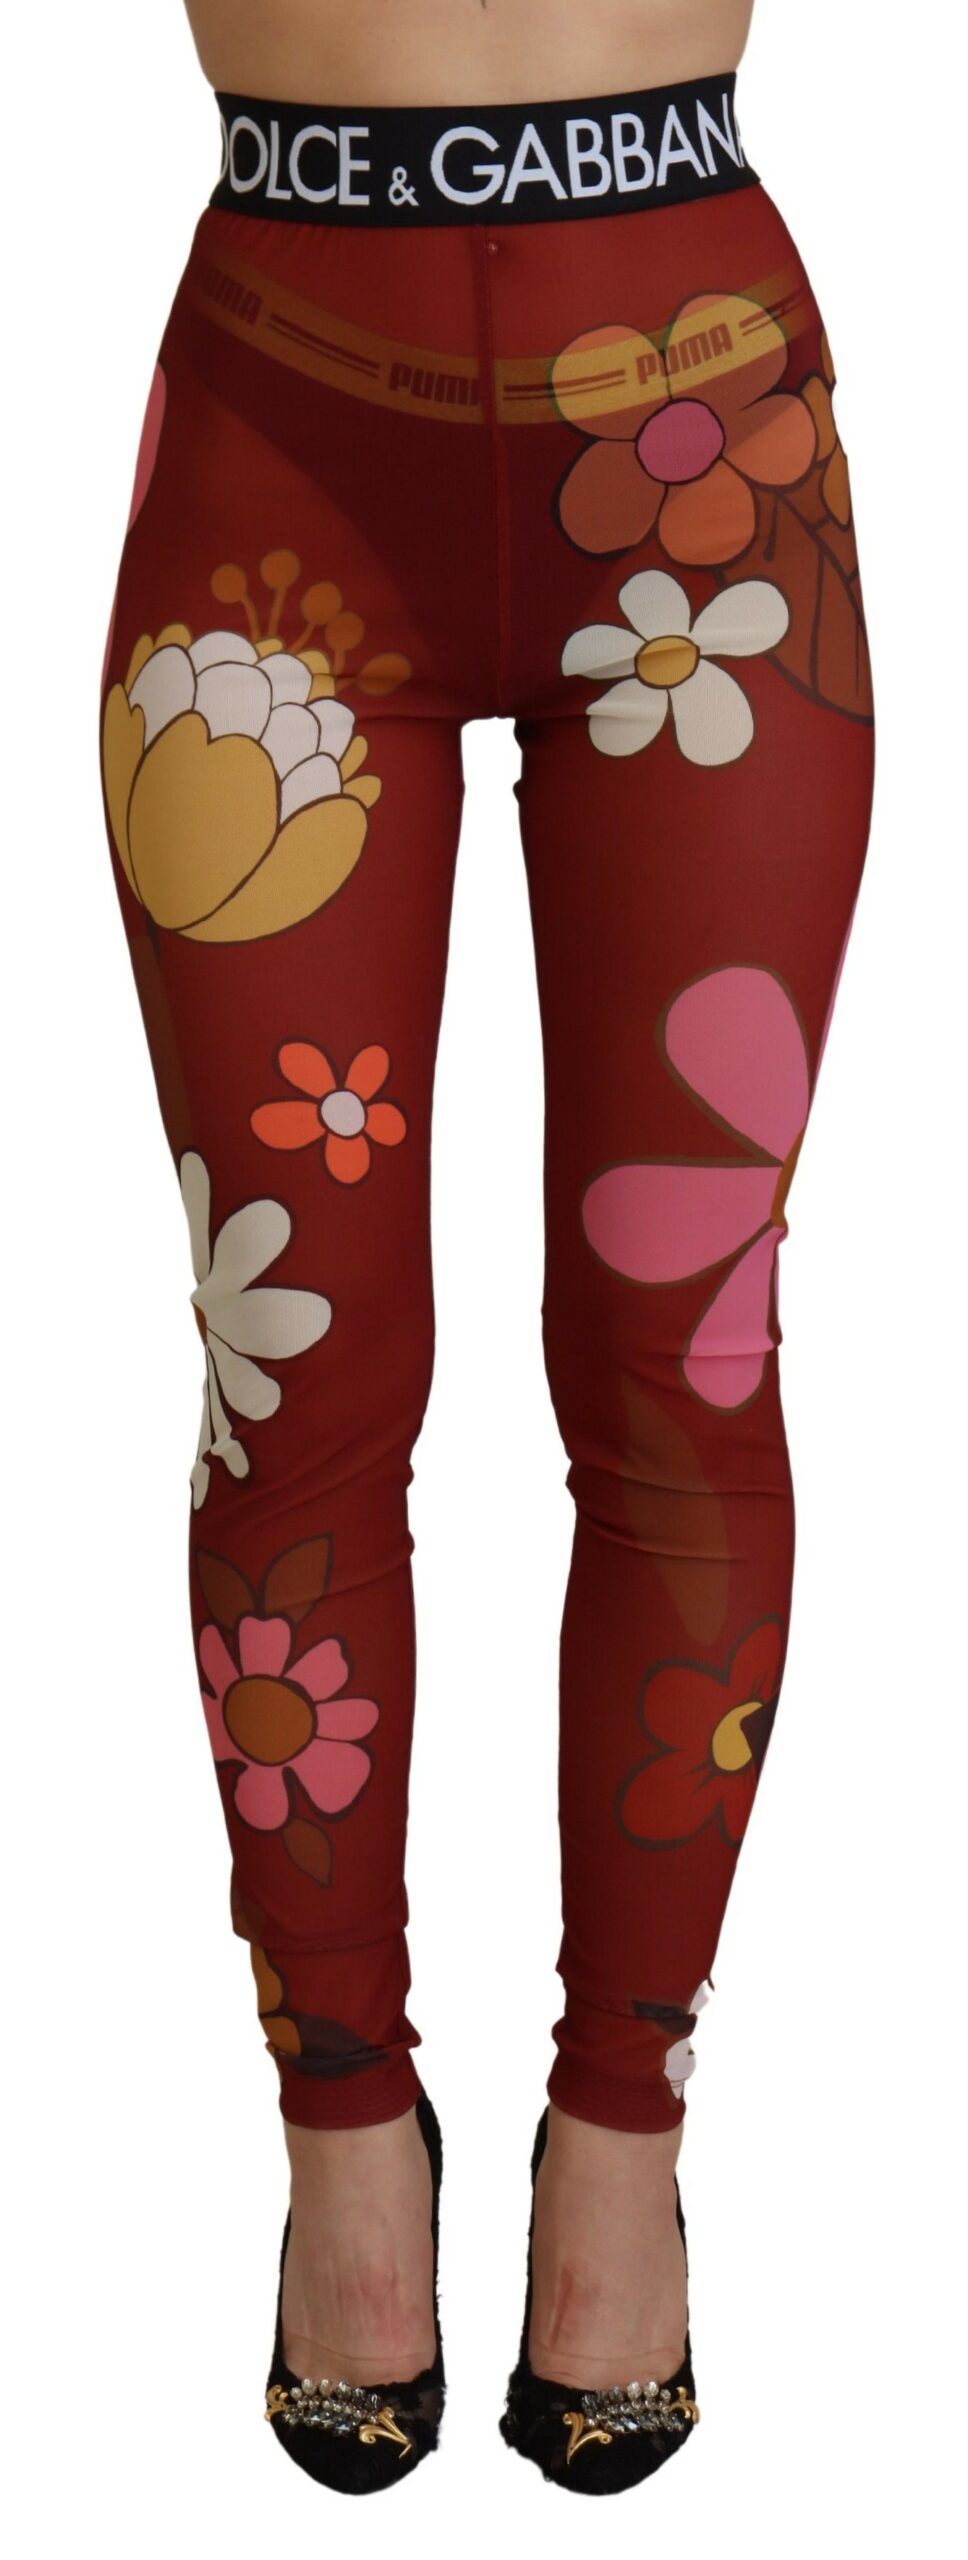 Dolce & Gabbana Red Floral Leggings Stretch Waist Women's Pants